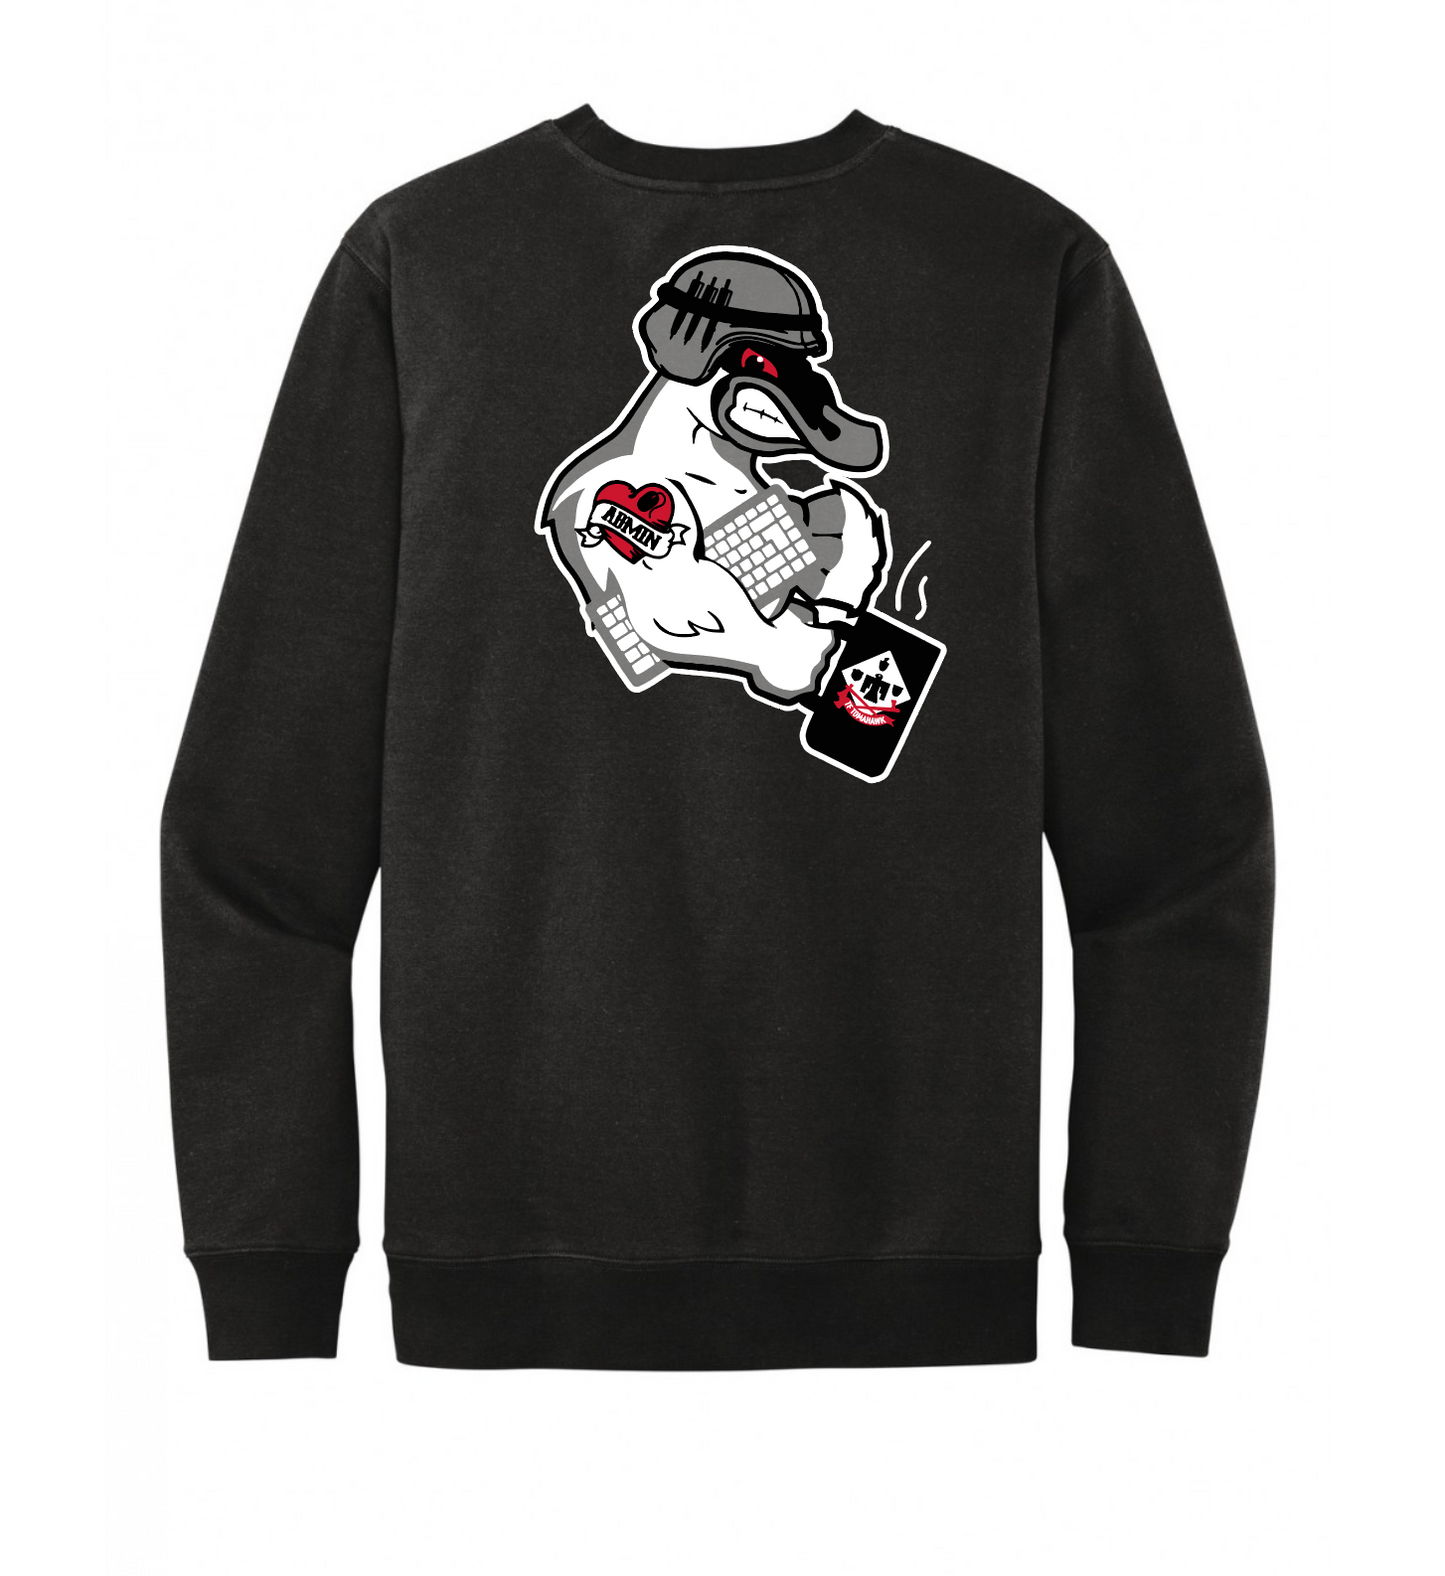 S1 Black Crewneck Sweatshirt